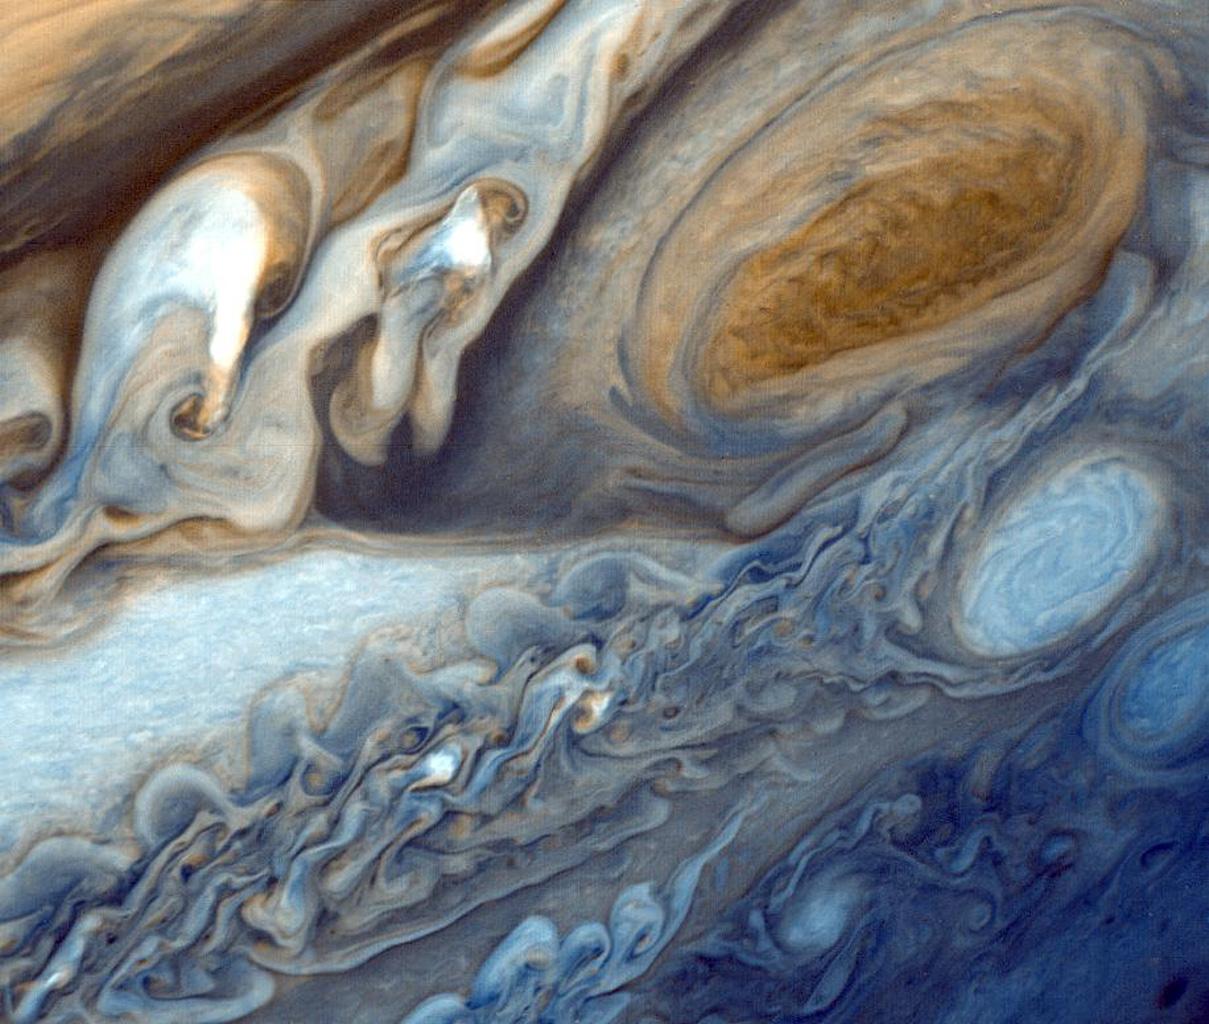 Jupiter’s powerful winds kick up